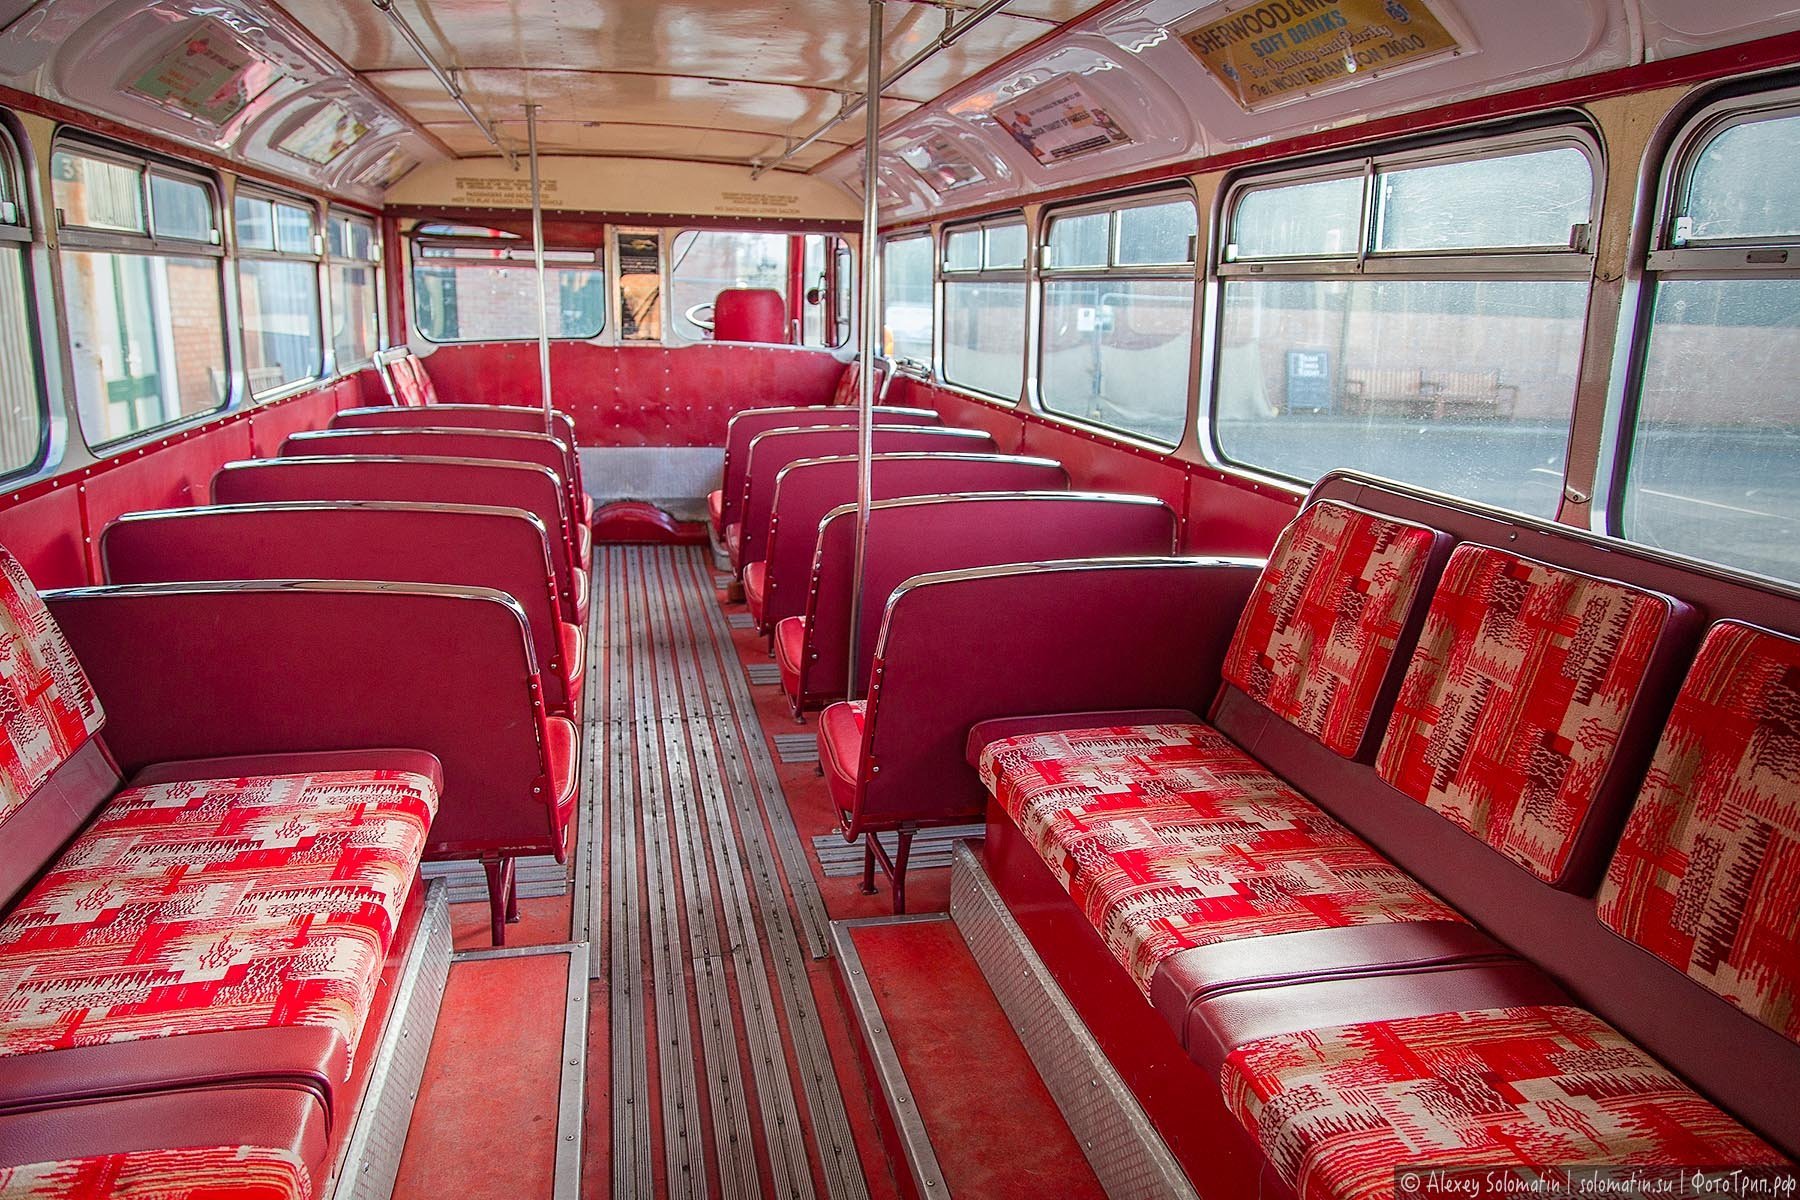 Салон общественного транспорта. Routemaster кабина. Автобус Рутмастер 1954. Routemaster (даблдекер) 1954. Routemaster Bus изнутри.